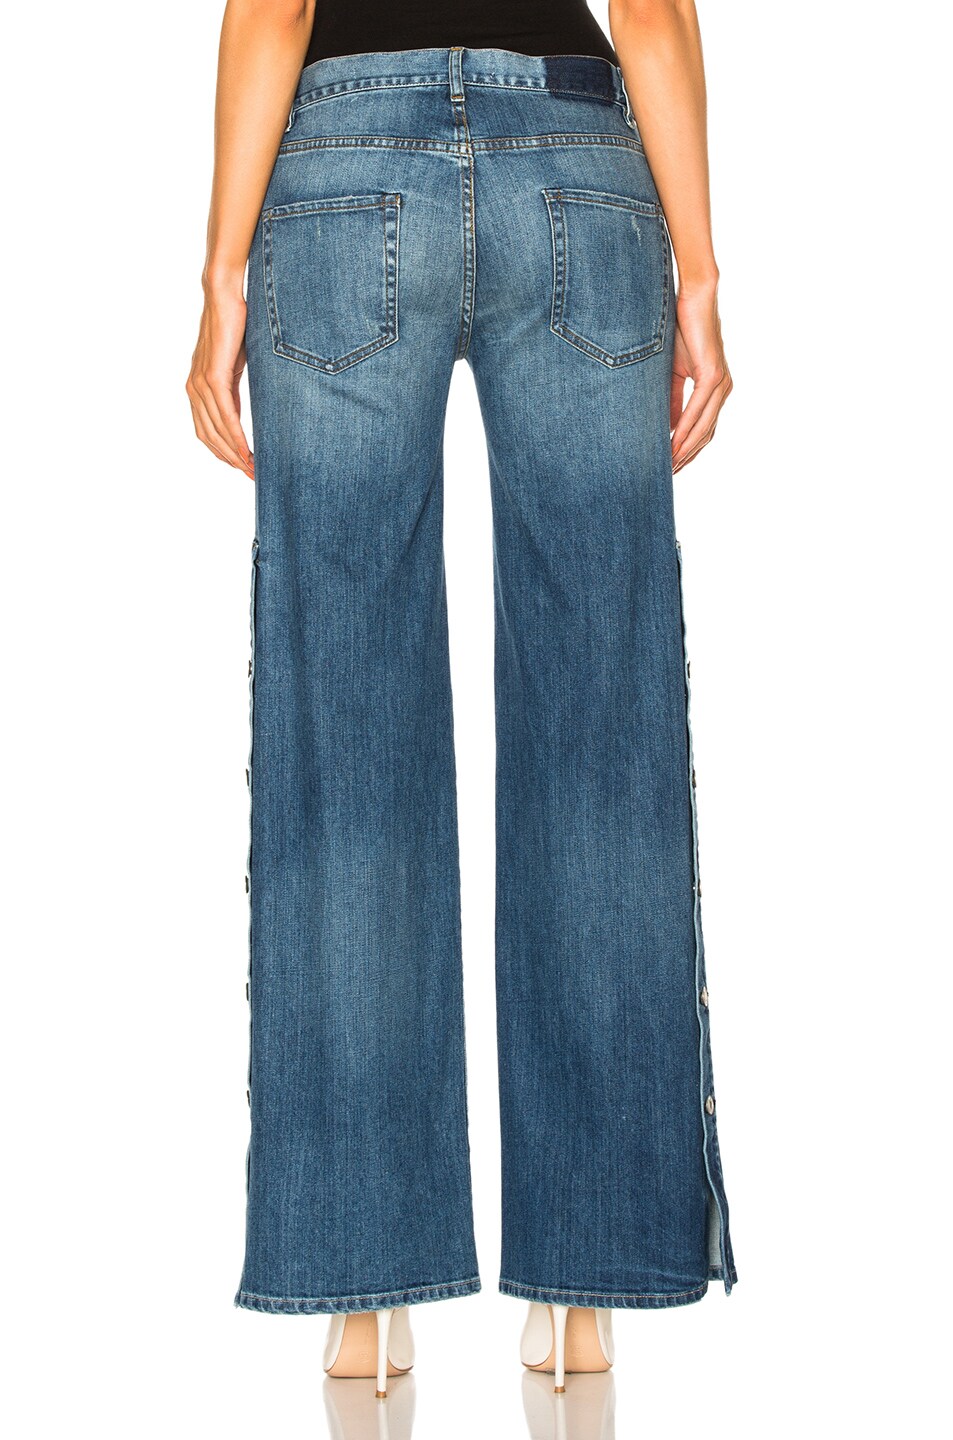 2 Stores In Stock: NILI LOTAN Ena Wide Leg Jeans, Duane Wash | ModeSens